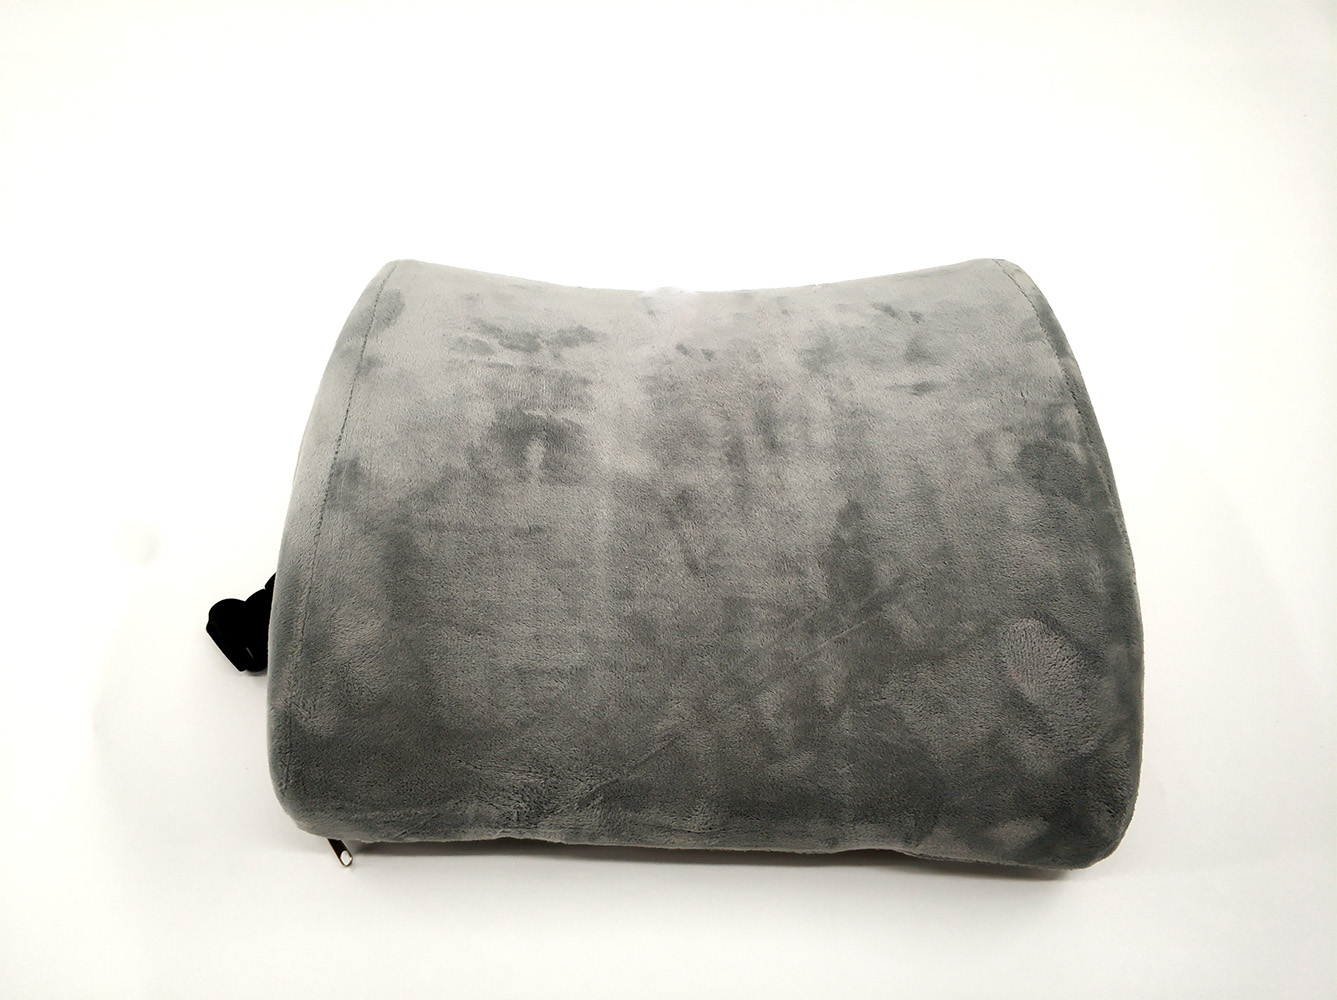 Comfort Lumbar Support Pillow for Office Desk Chair - Memory Foam Back Cushion